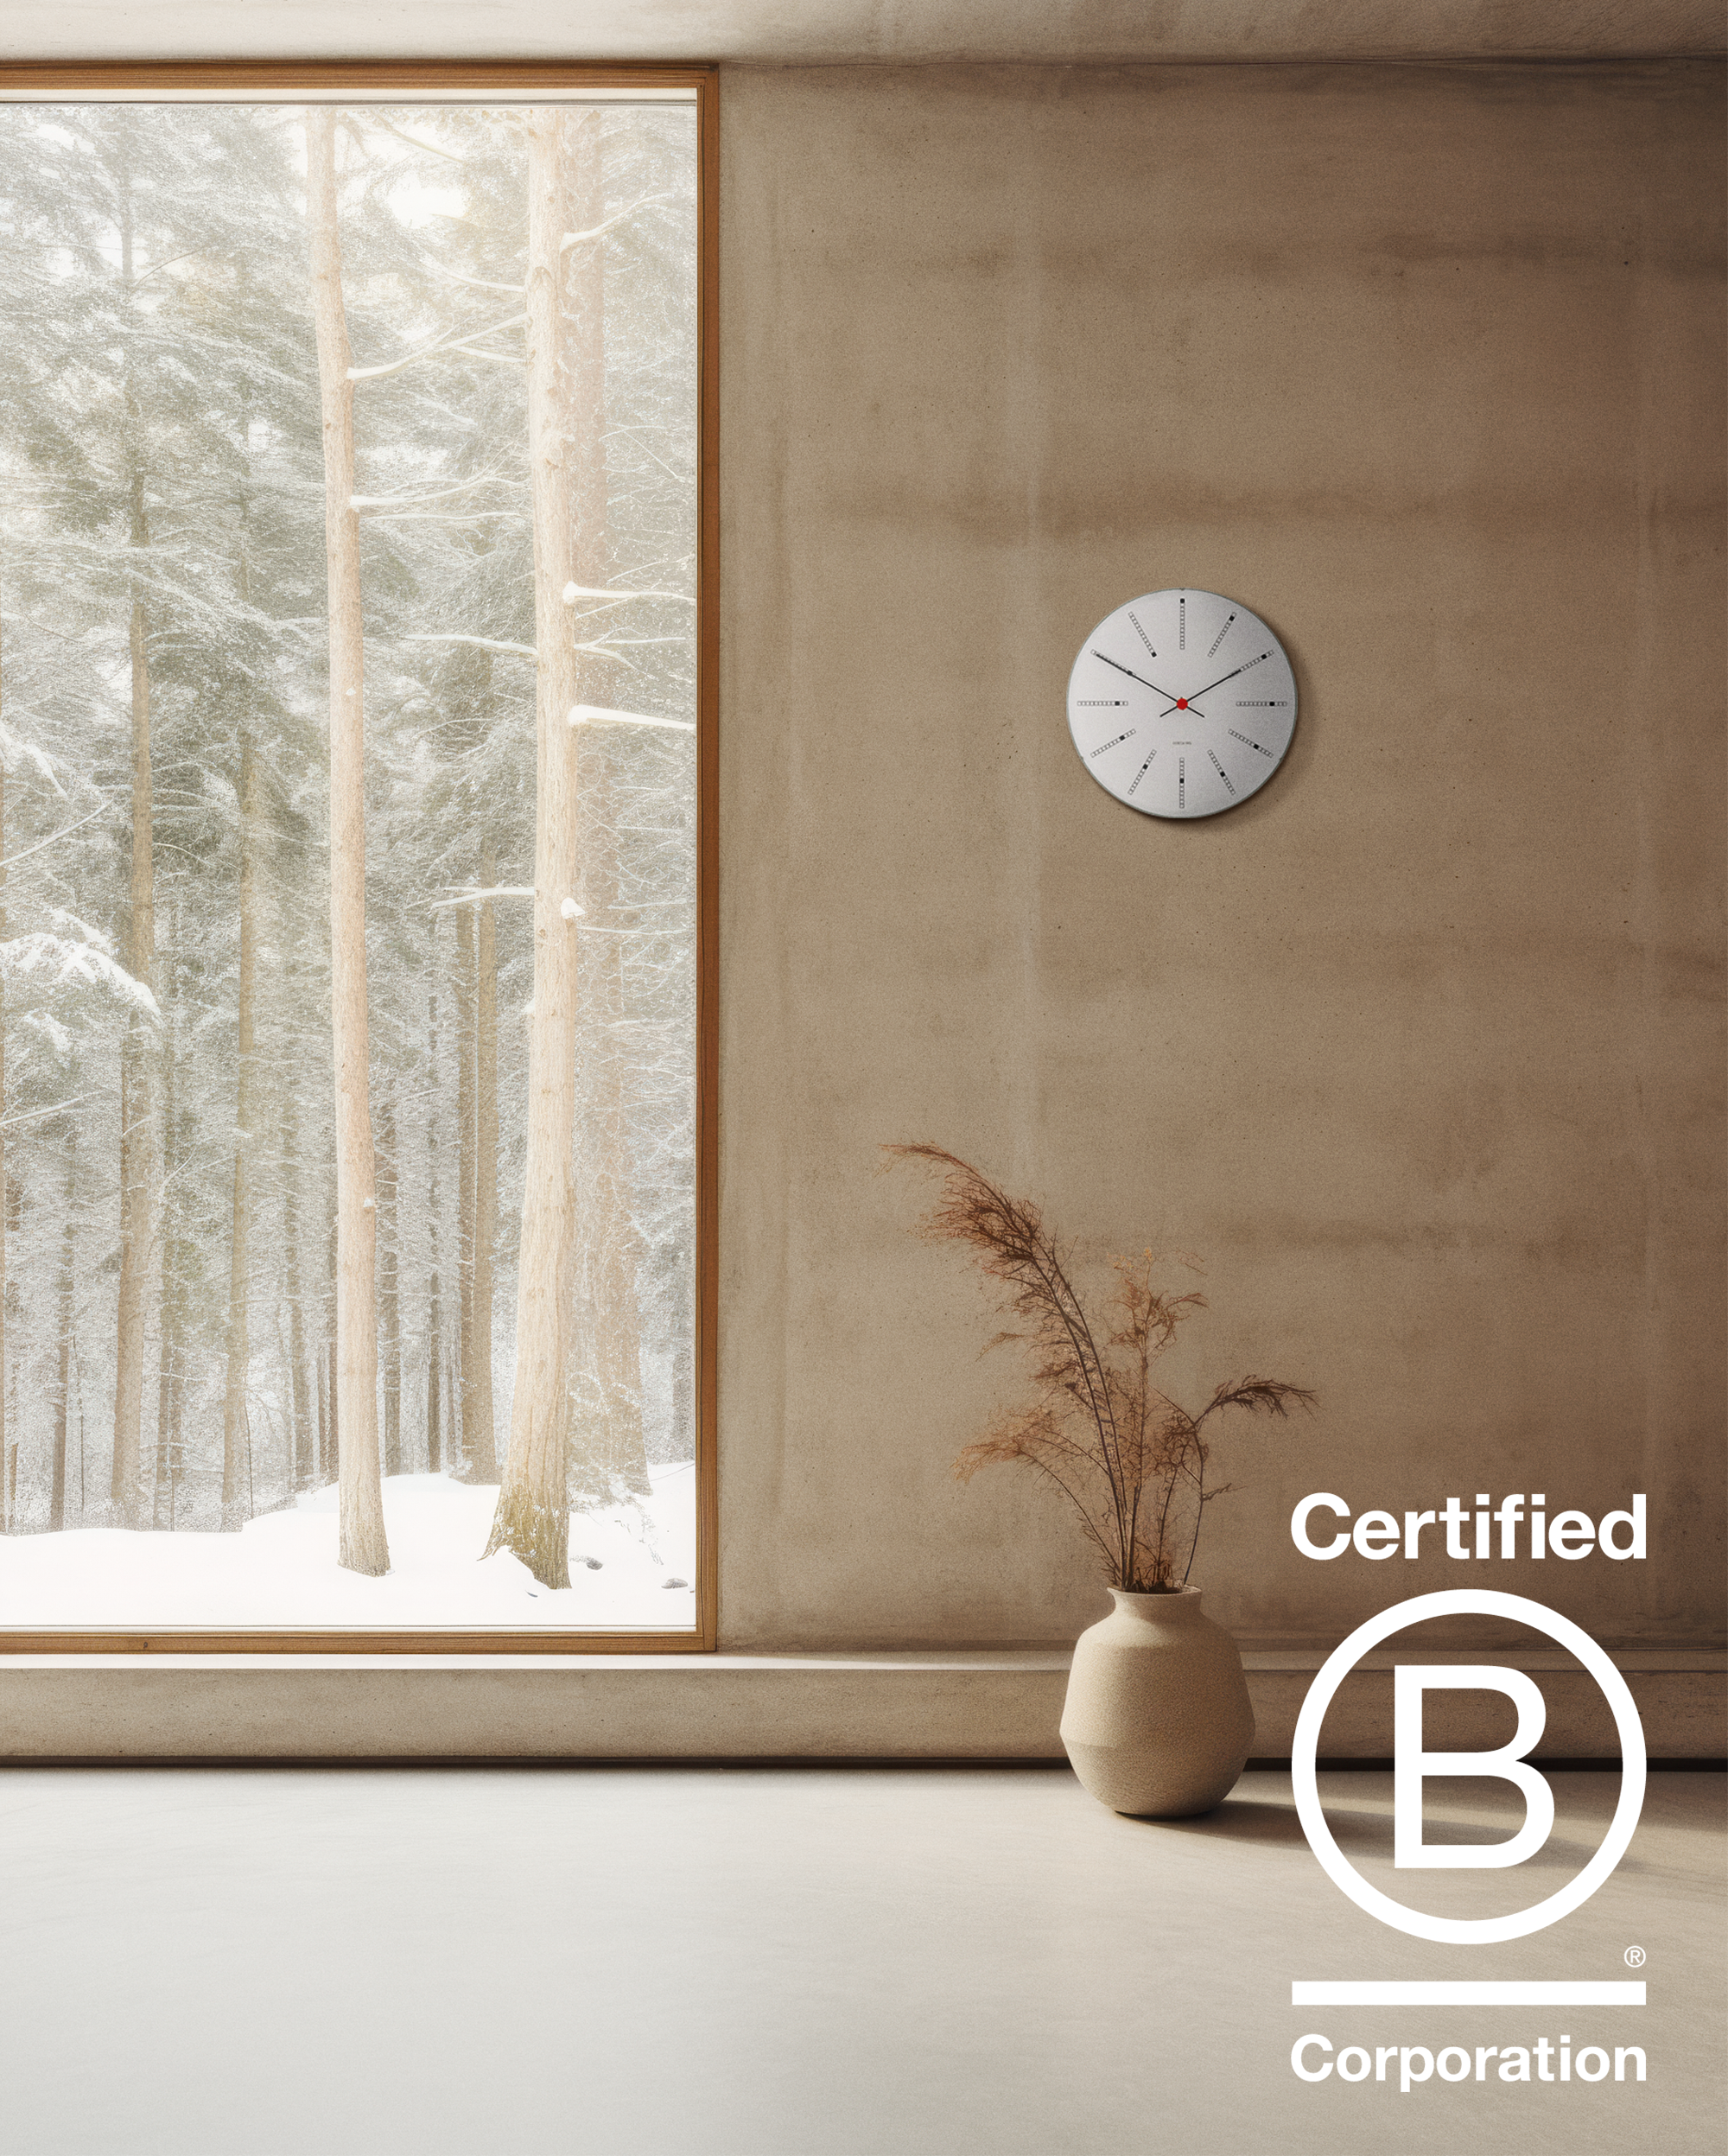 Arne Jacobsen Clocks, B Corp logo